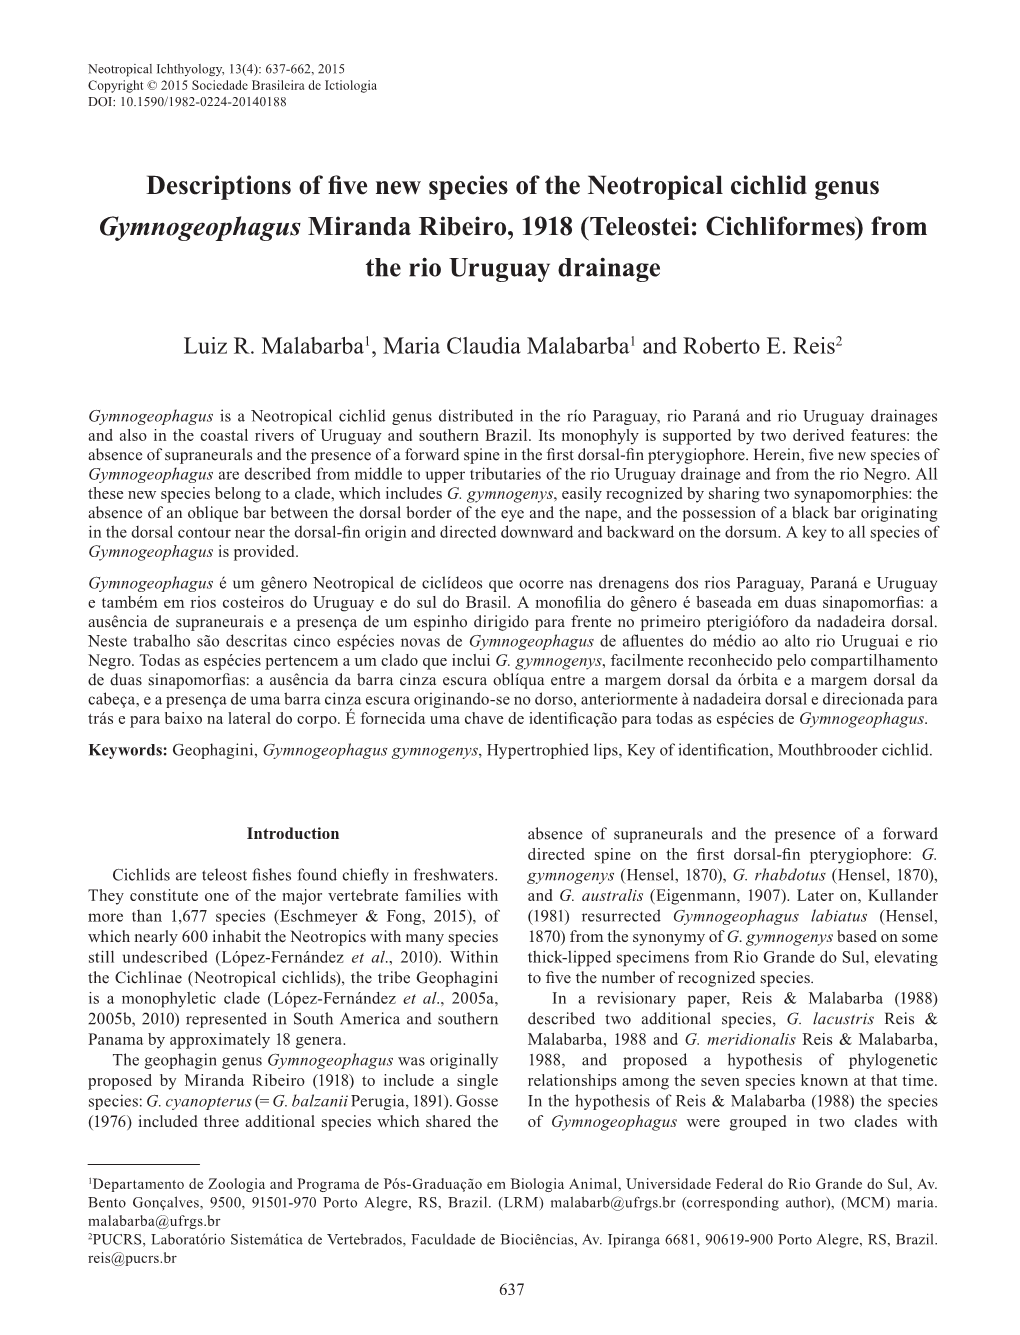 Descriptions of Five New Species of the Neotropical Cichlid Genus Gymnogeophagus Miranda Ribeiro, 1918 (Teleostei: Cichliformes) from the Rio Uruguay Drainage